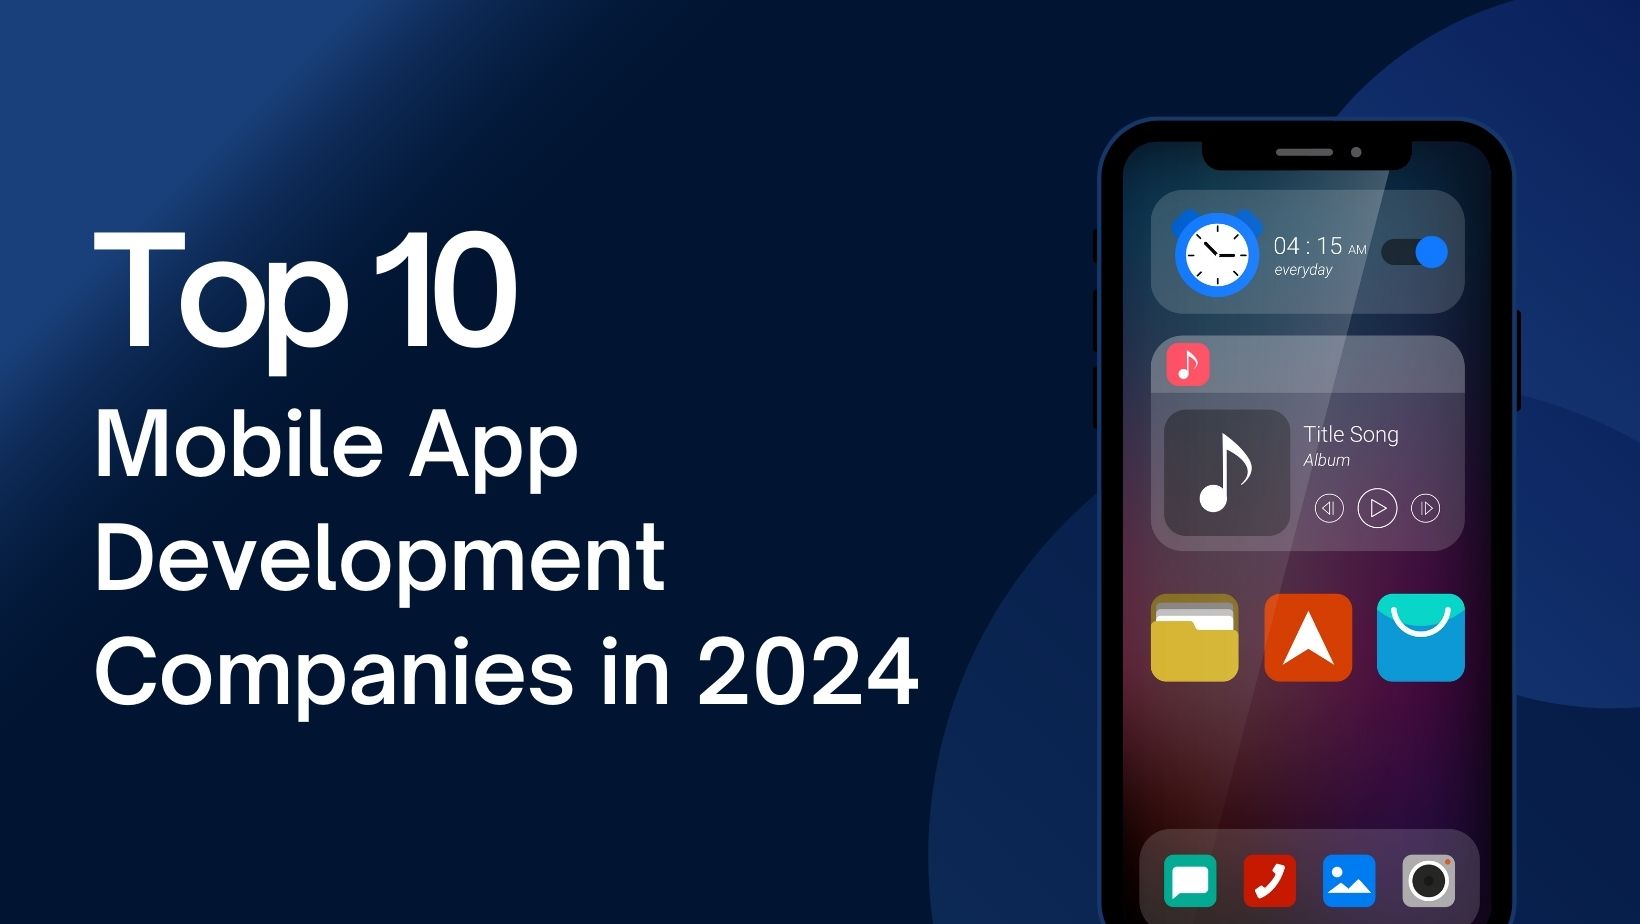 Top 10 Mobile App Development Companies in 2024